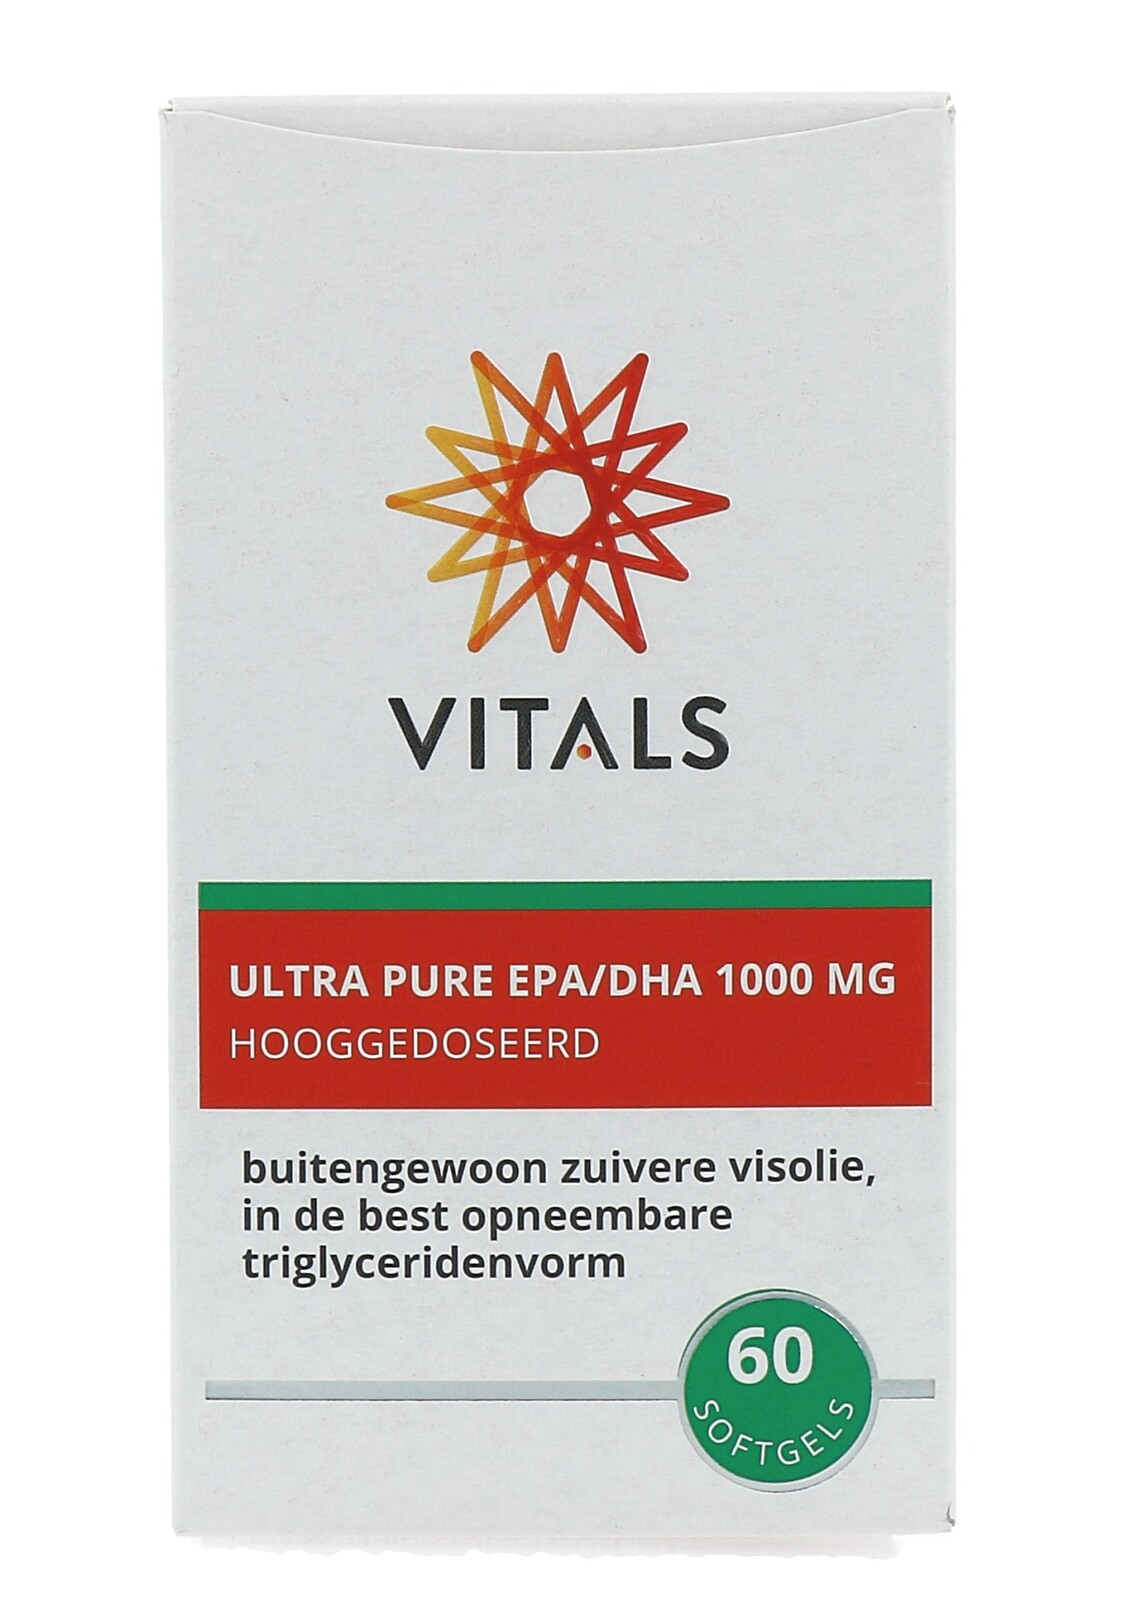 Vitals Ultra Pure EPA/DHA 1000mg kopen